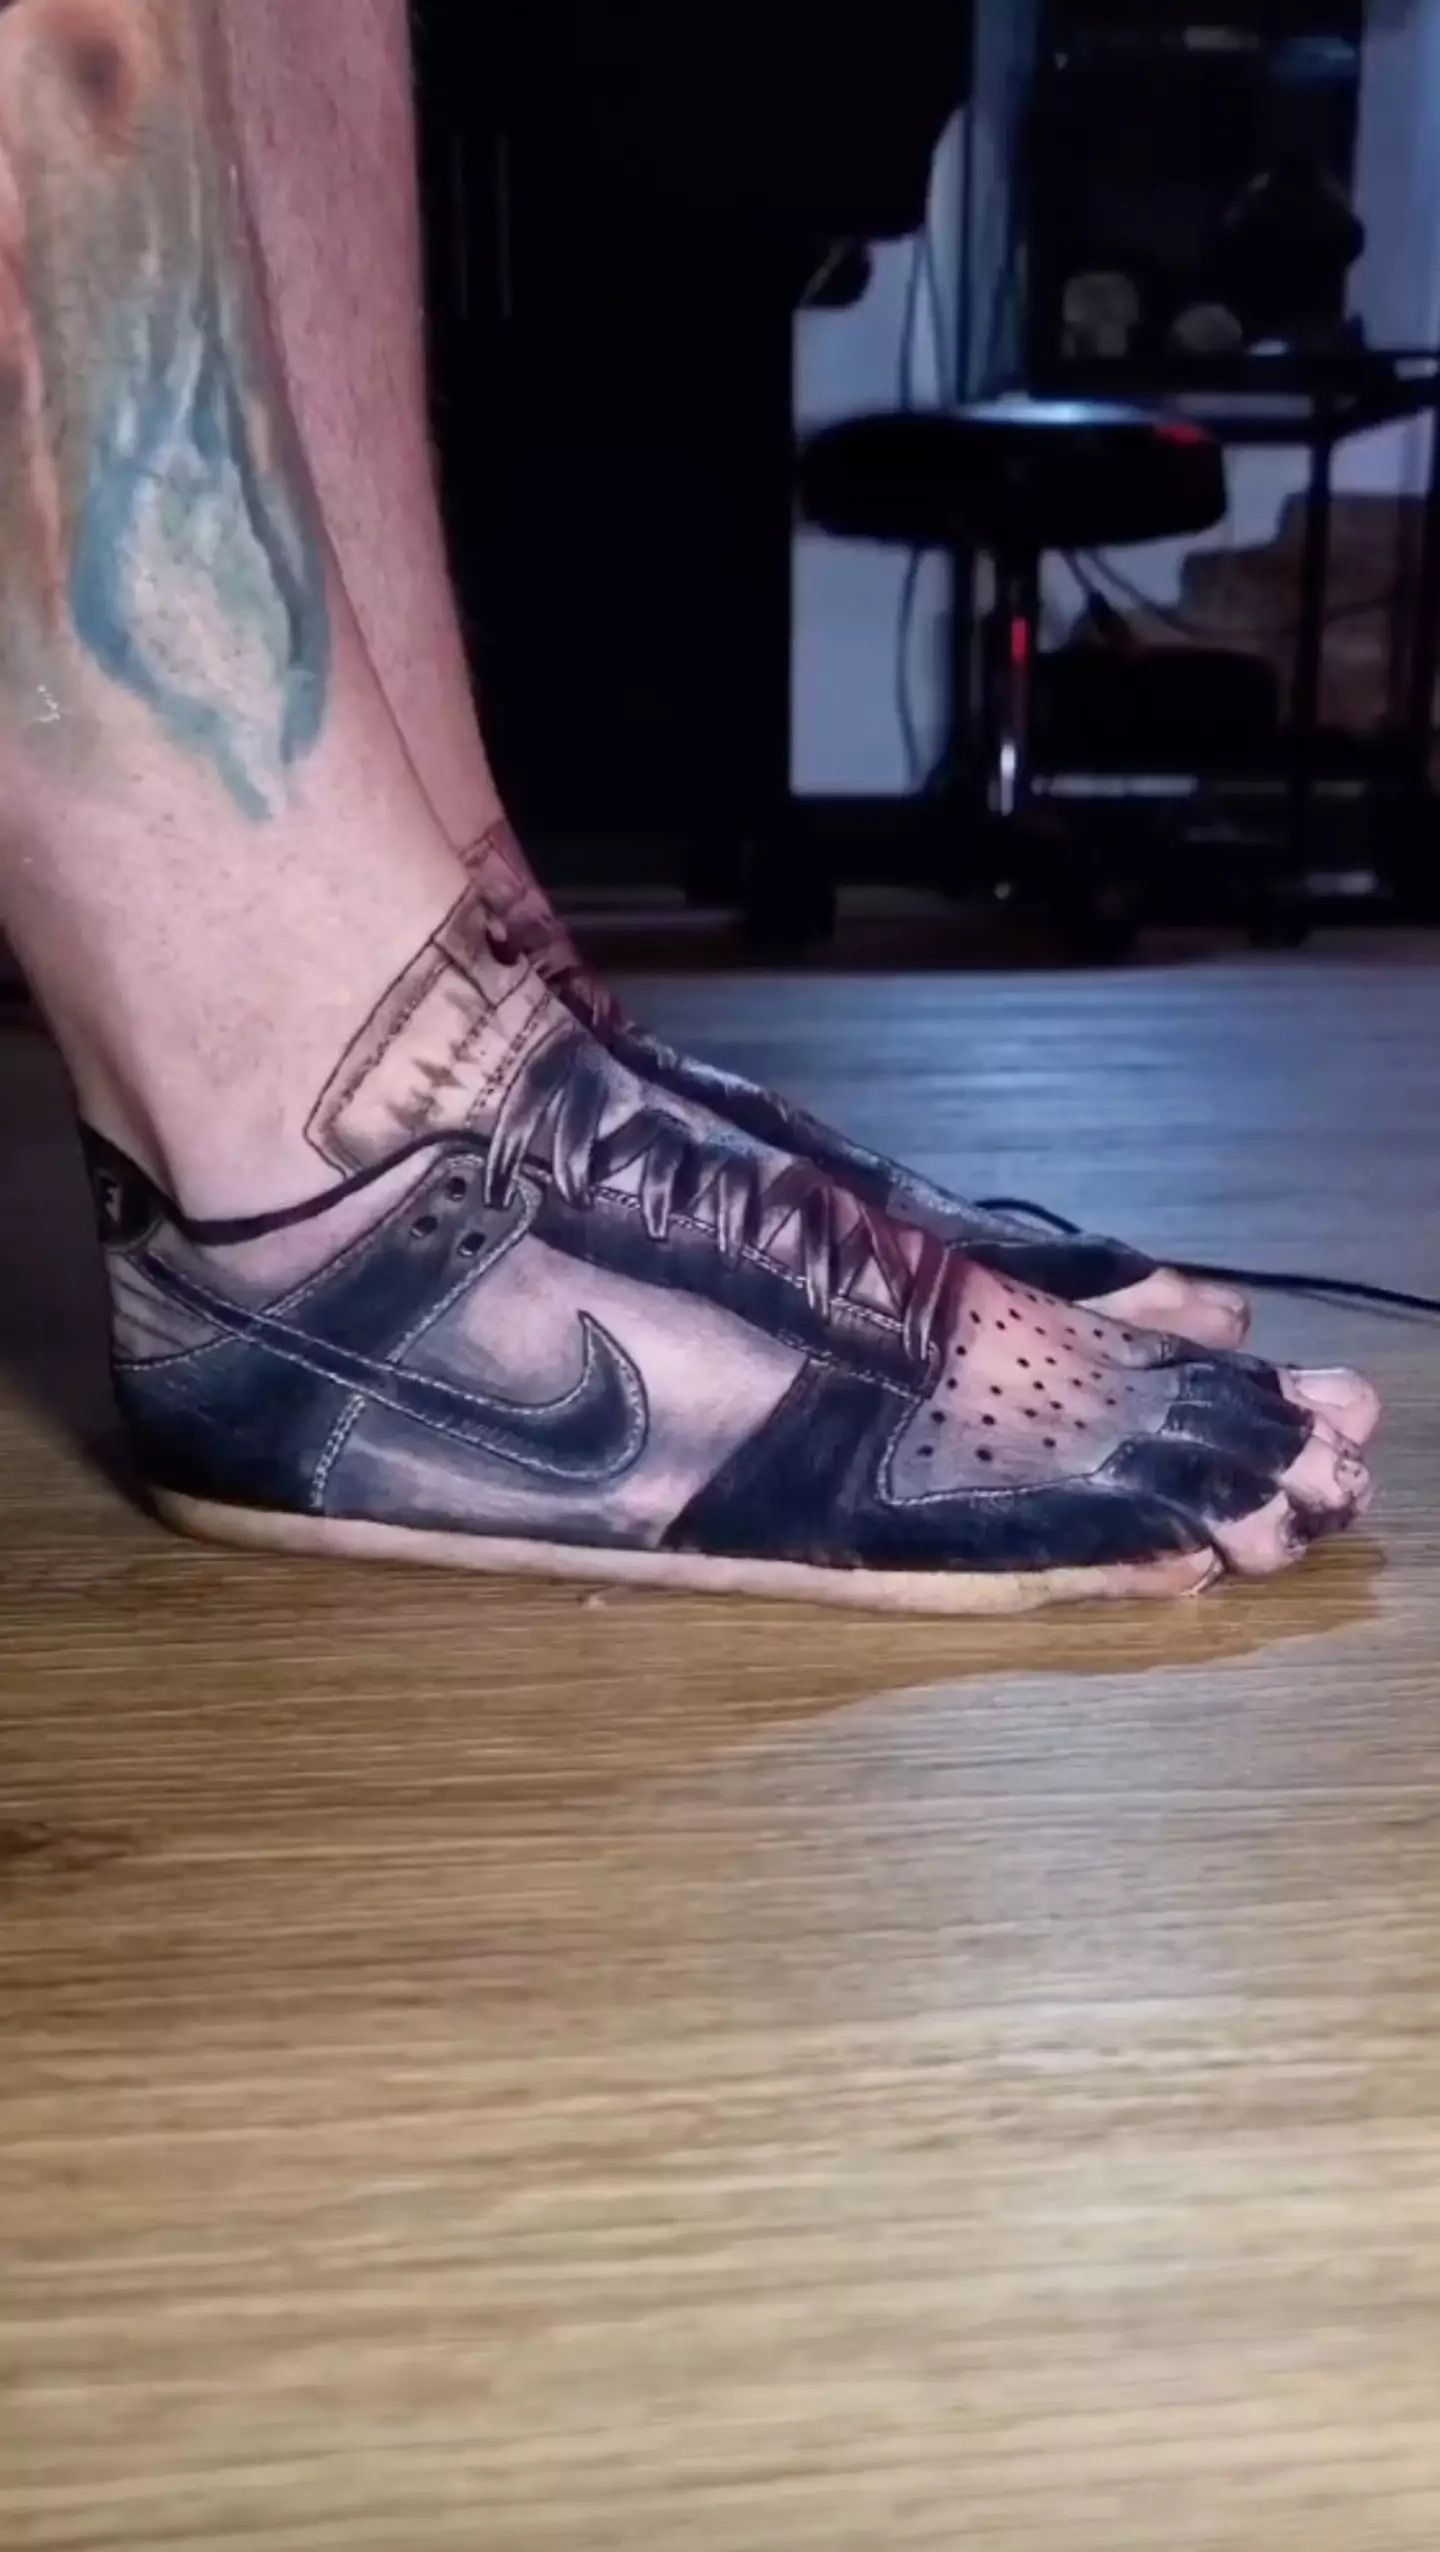 The bloke got both his feet tattoo.